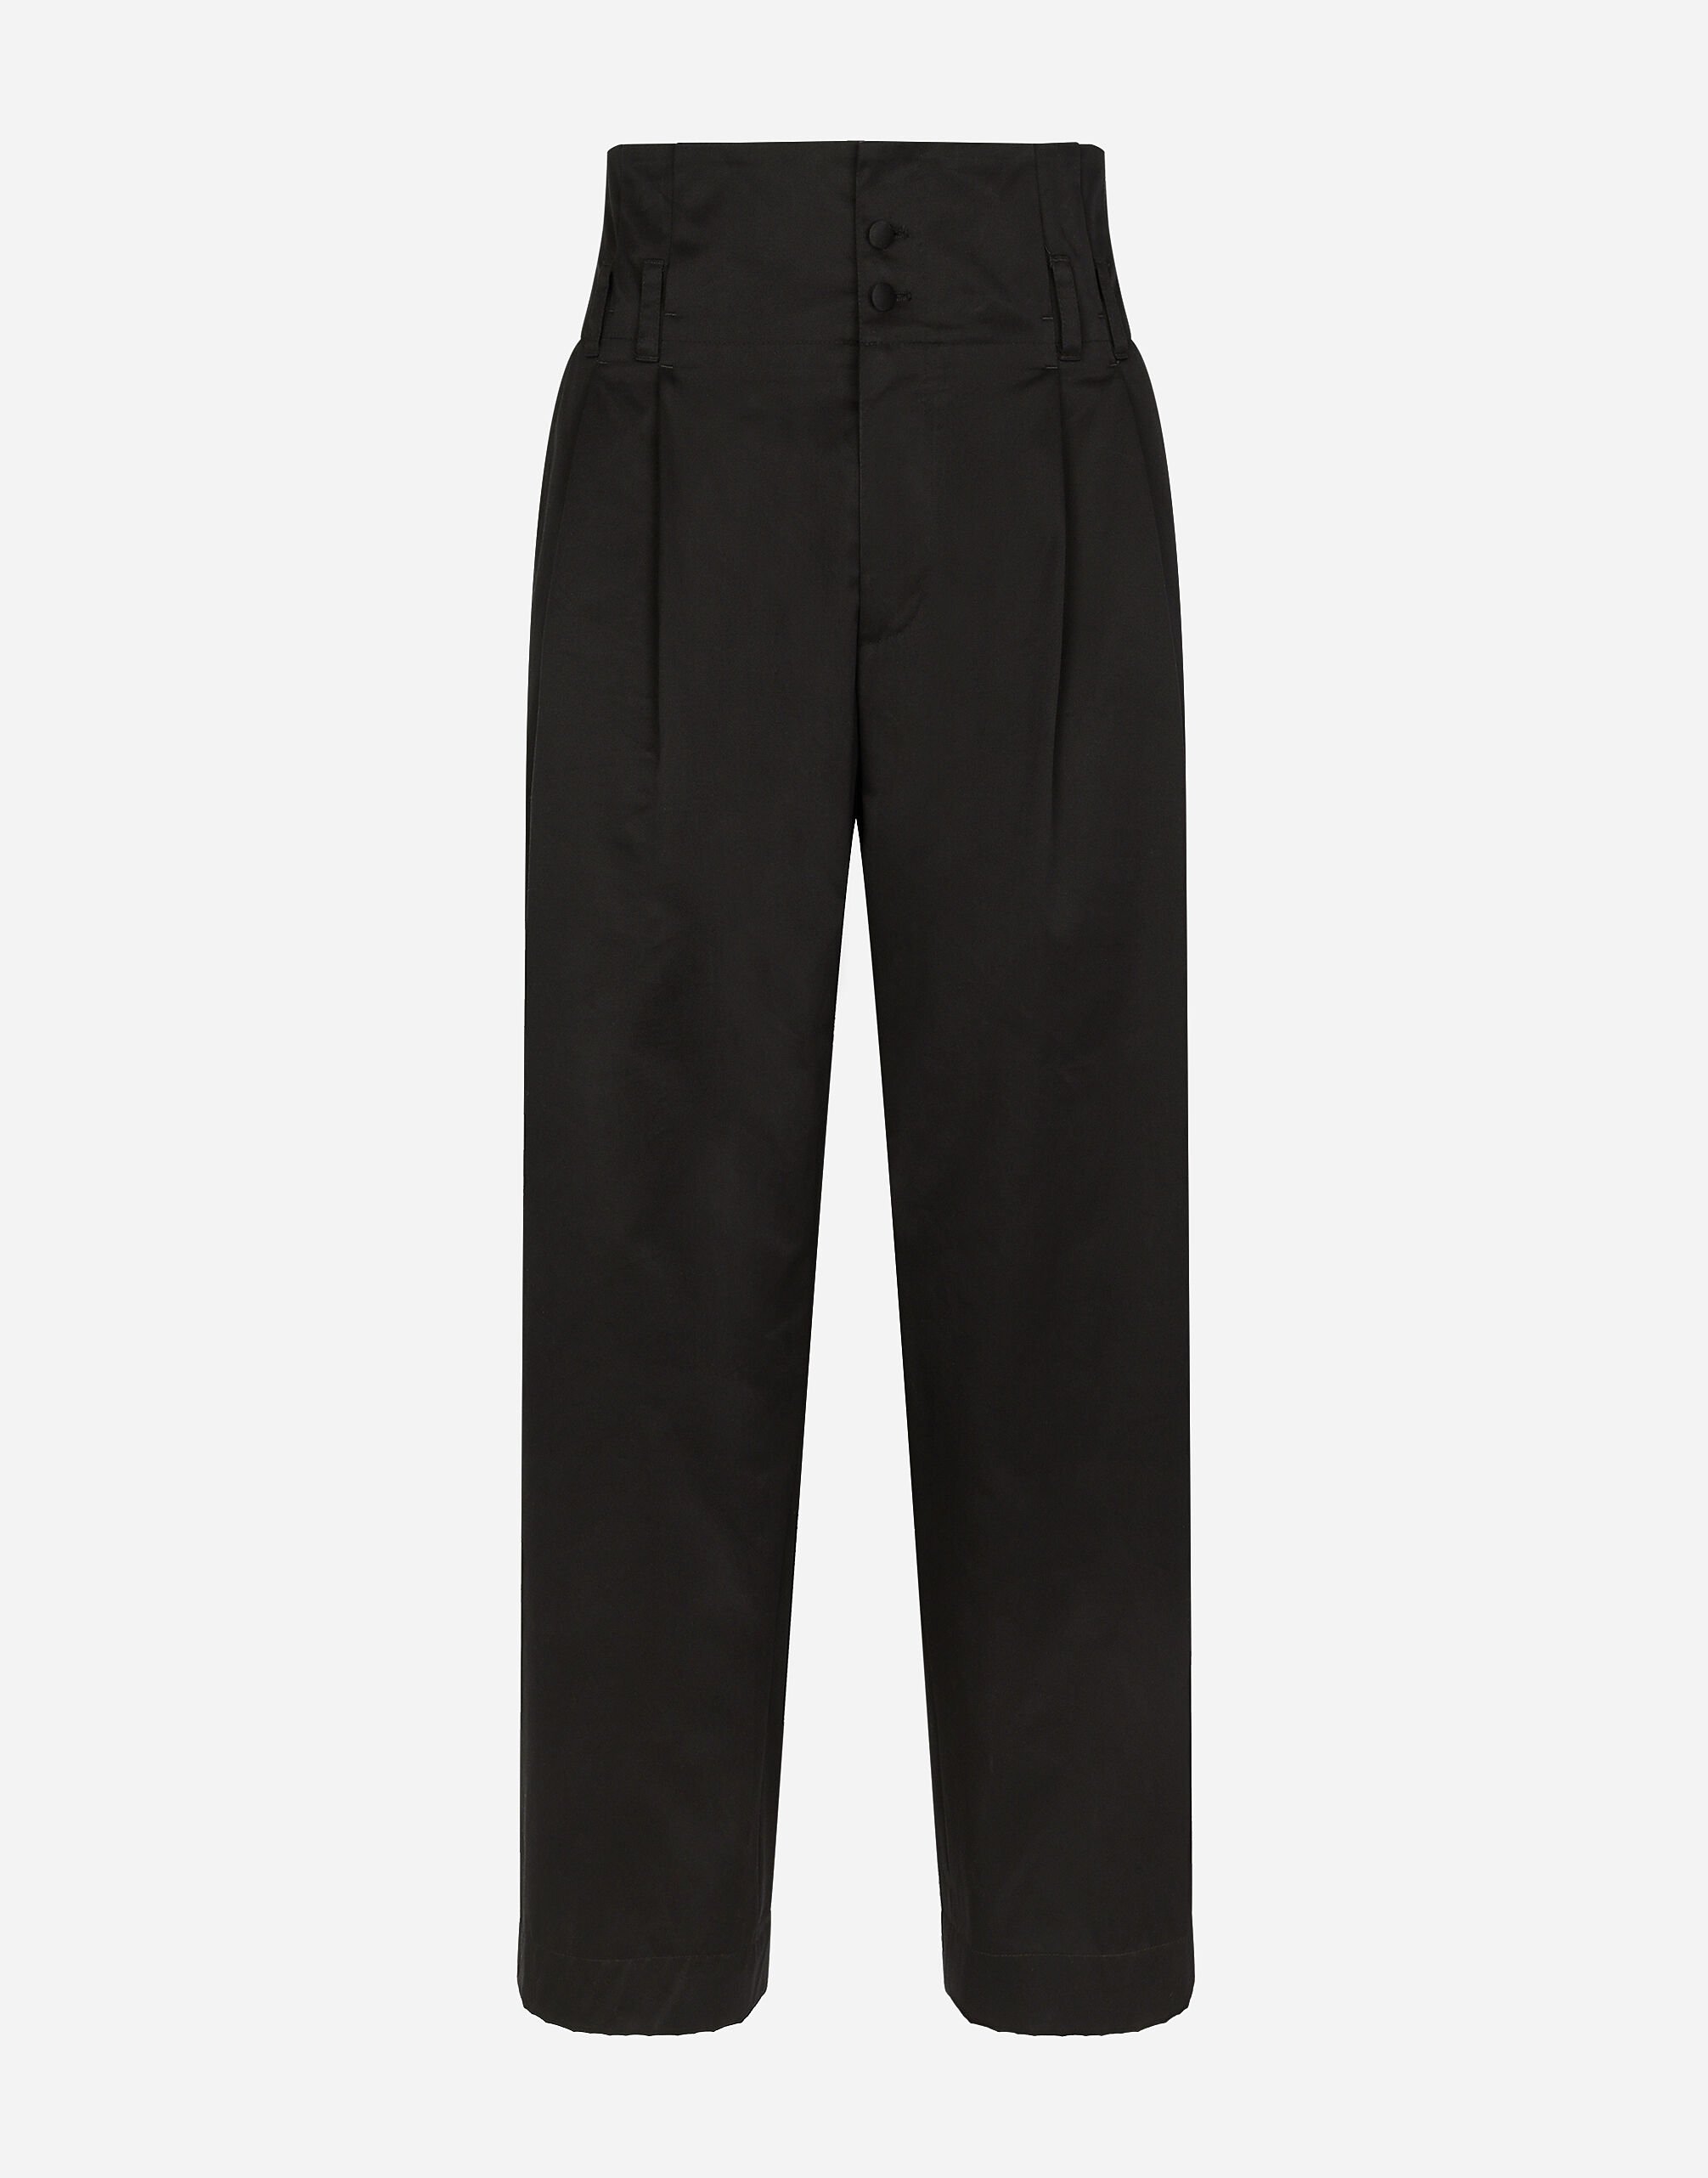 Dolce & Gabbana Tailored cotton pants Black GP03JTGH253